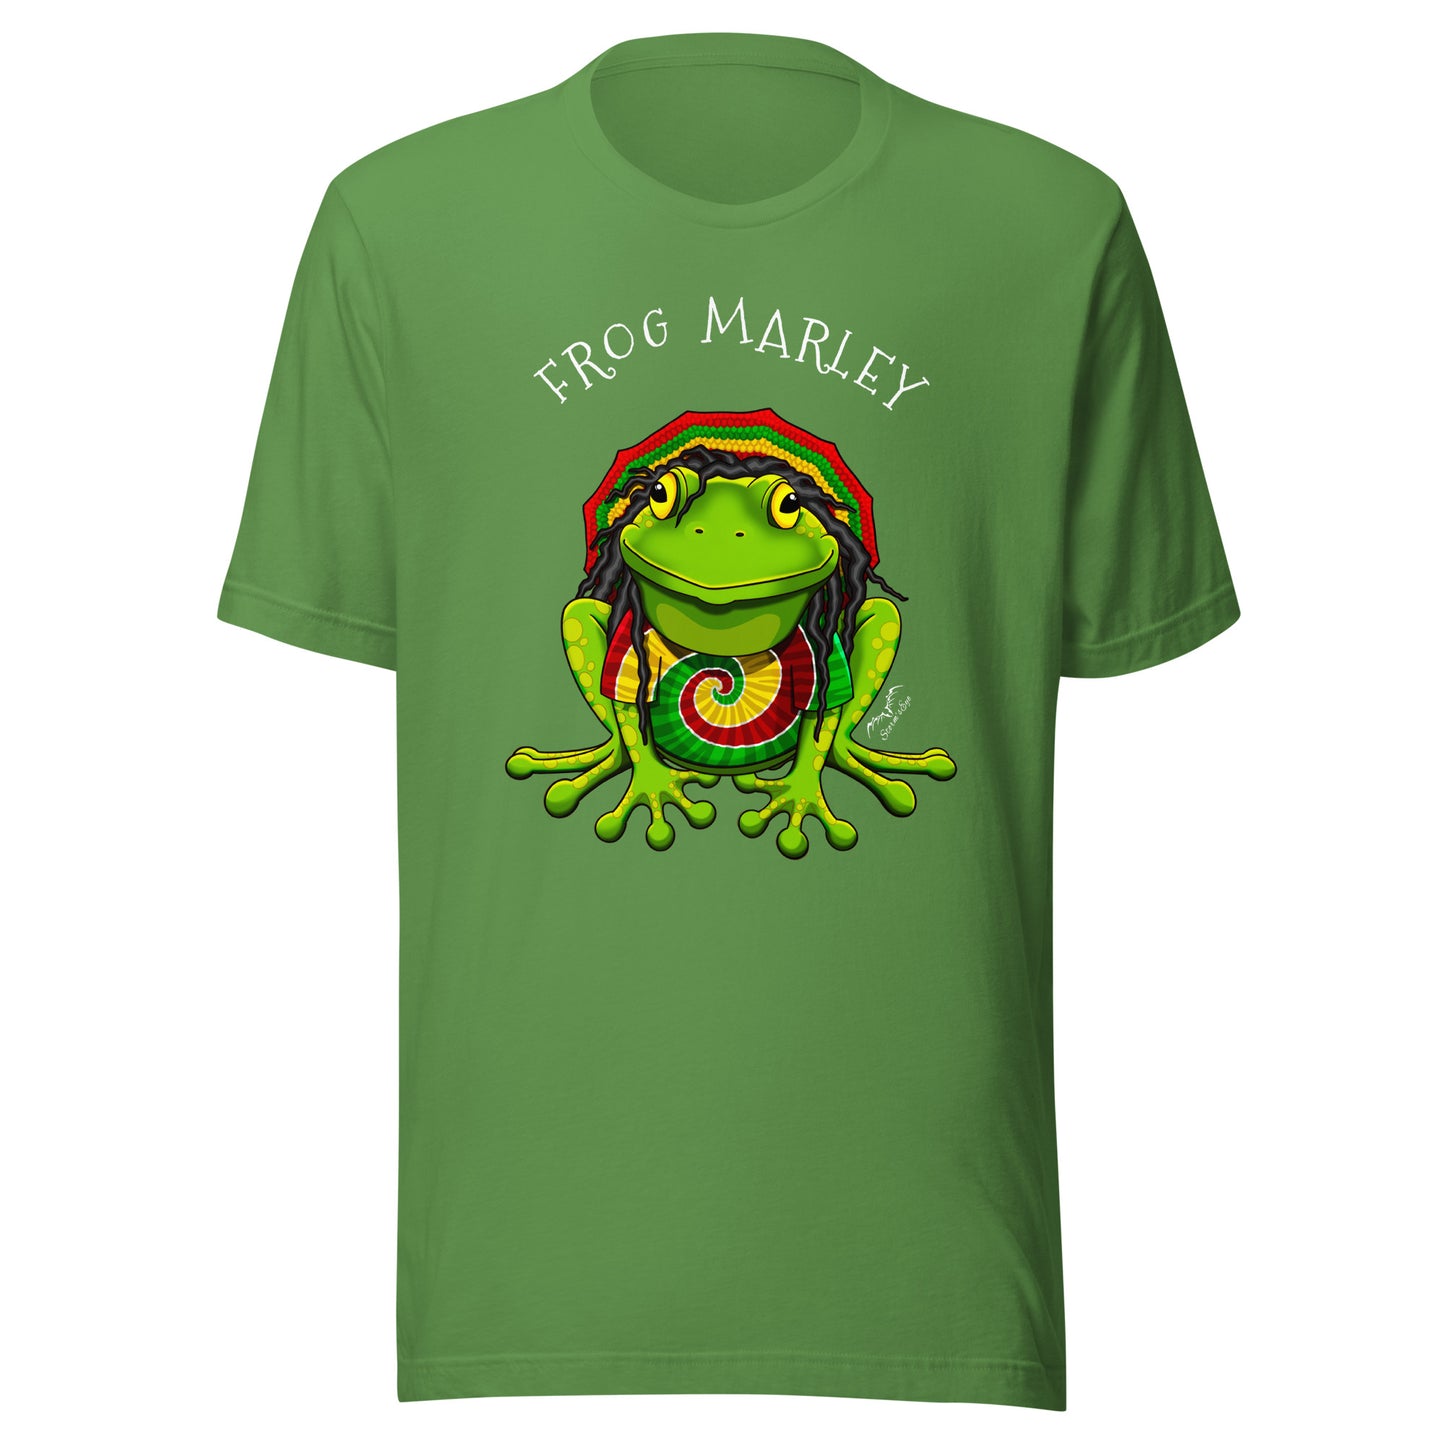 stormseye design frog marley reggae T shirt, flat view bright green